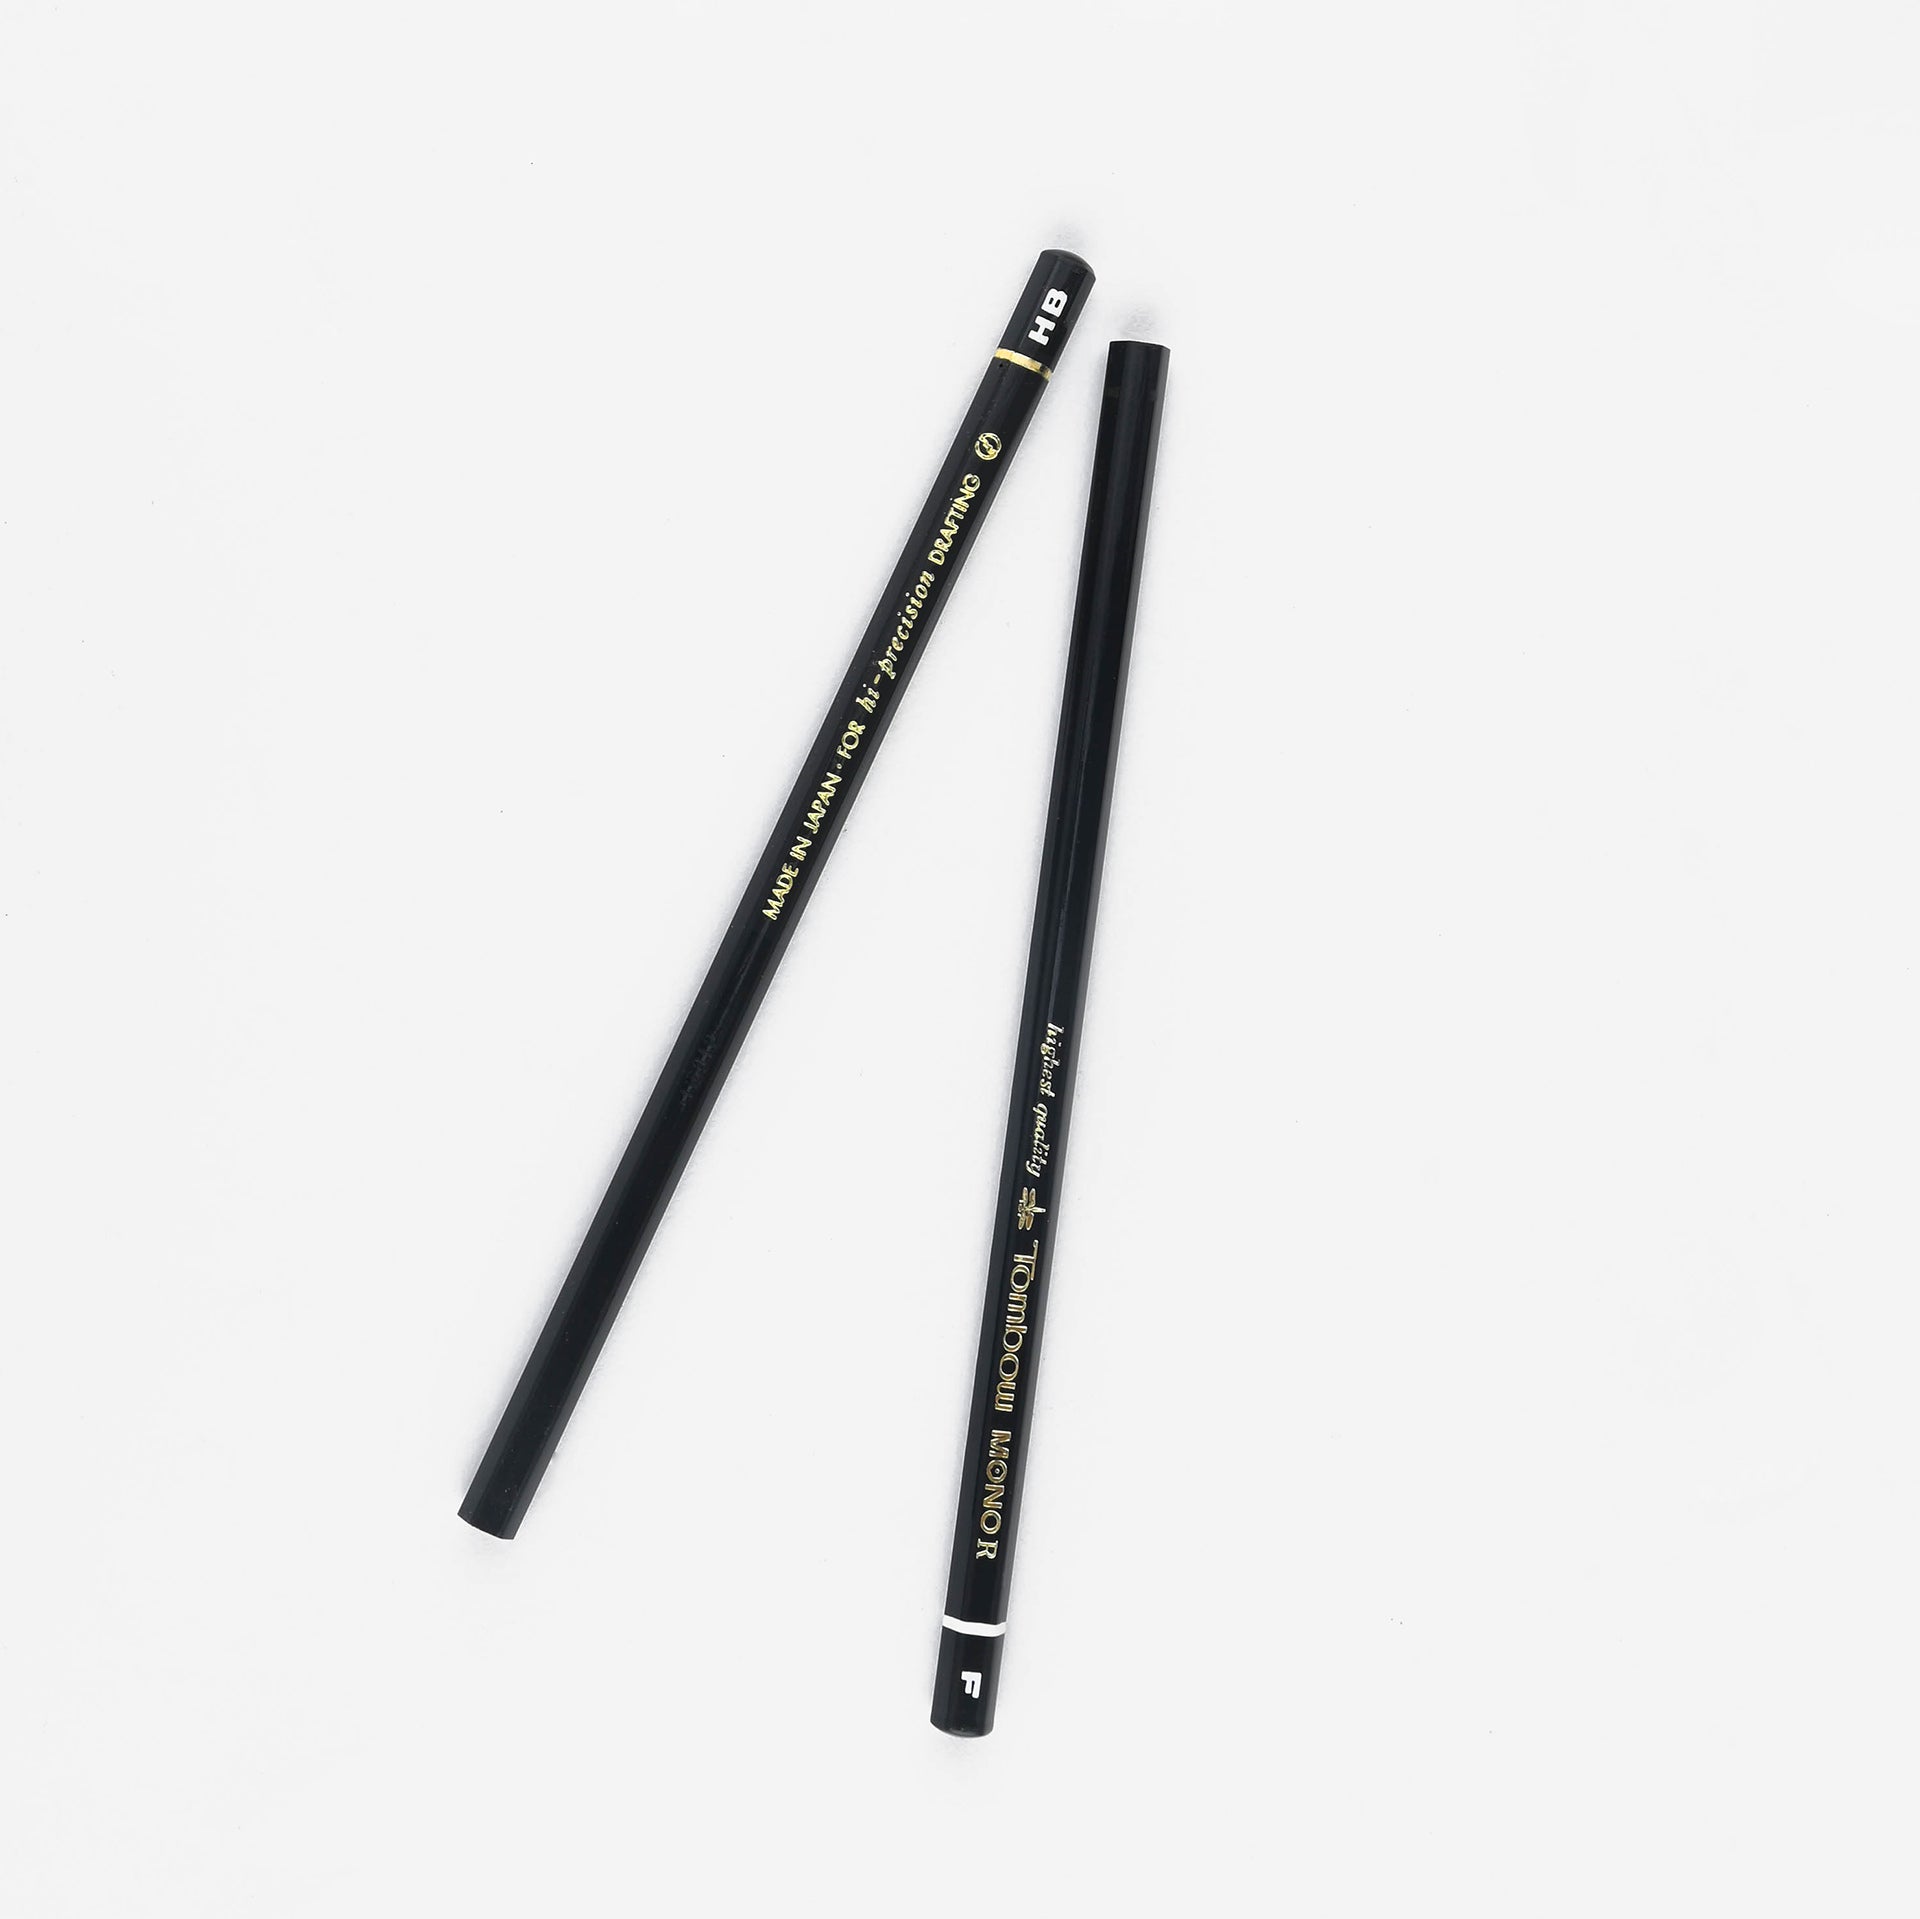 Tombow Mono R Pencil - HB